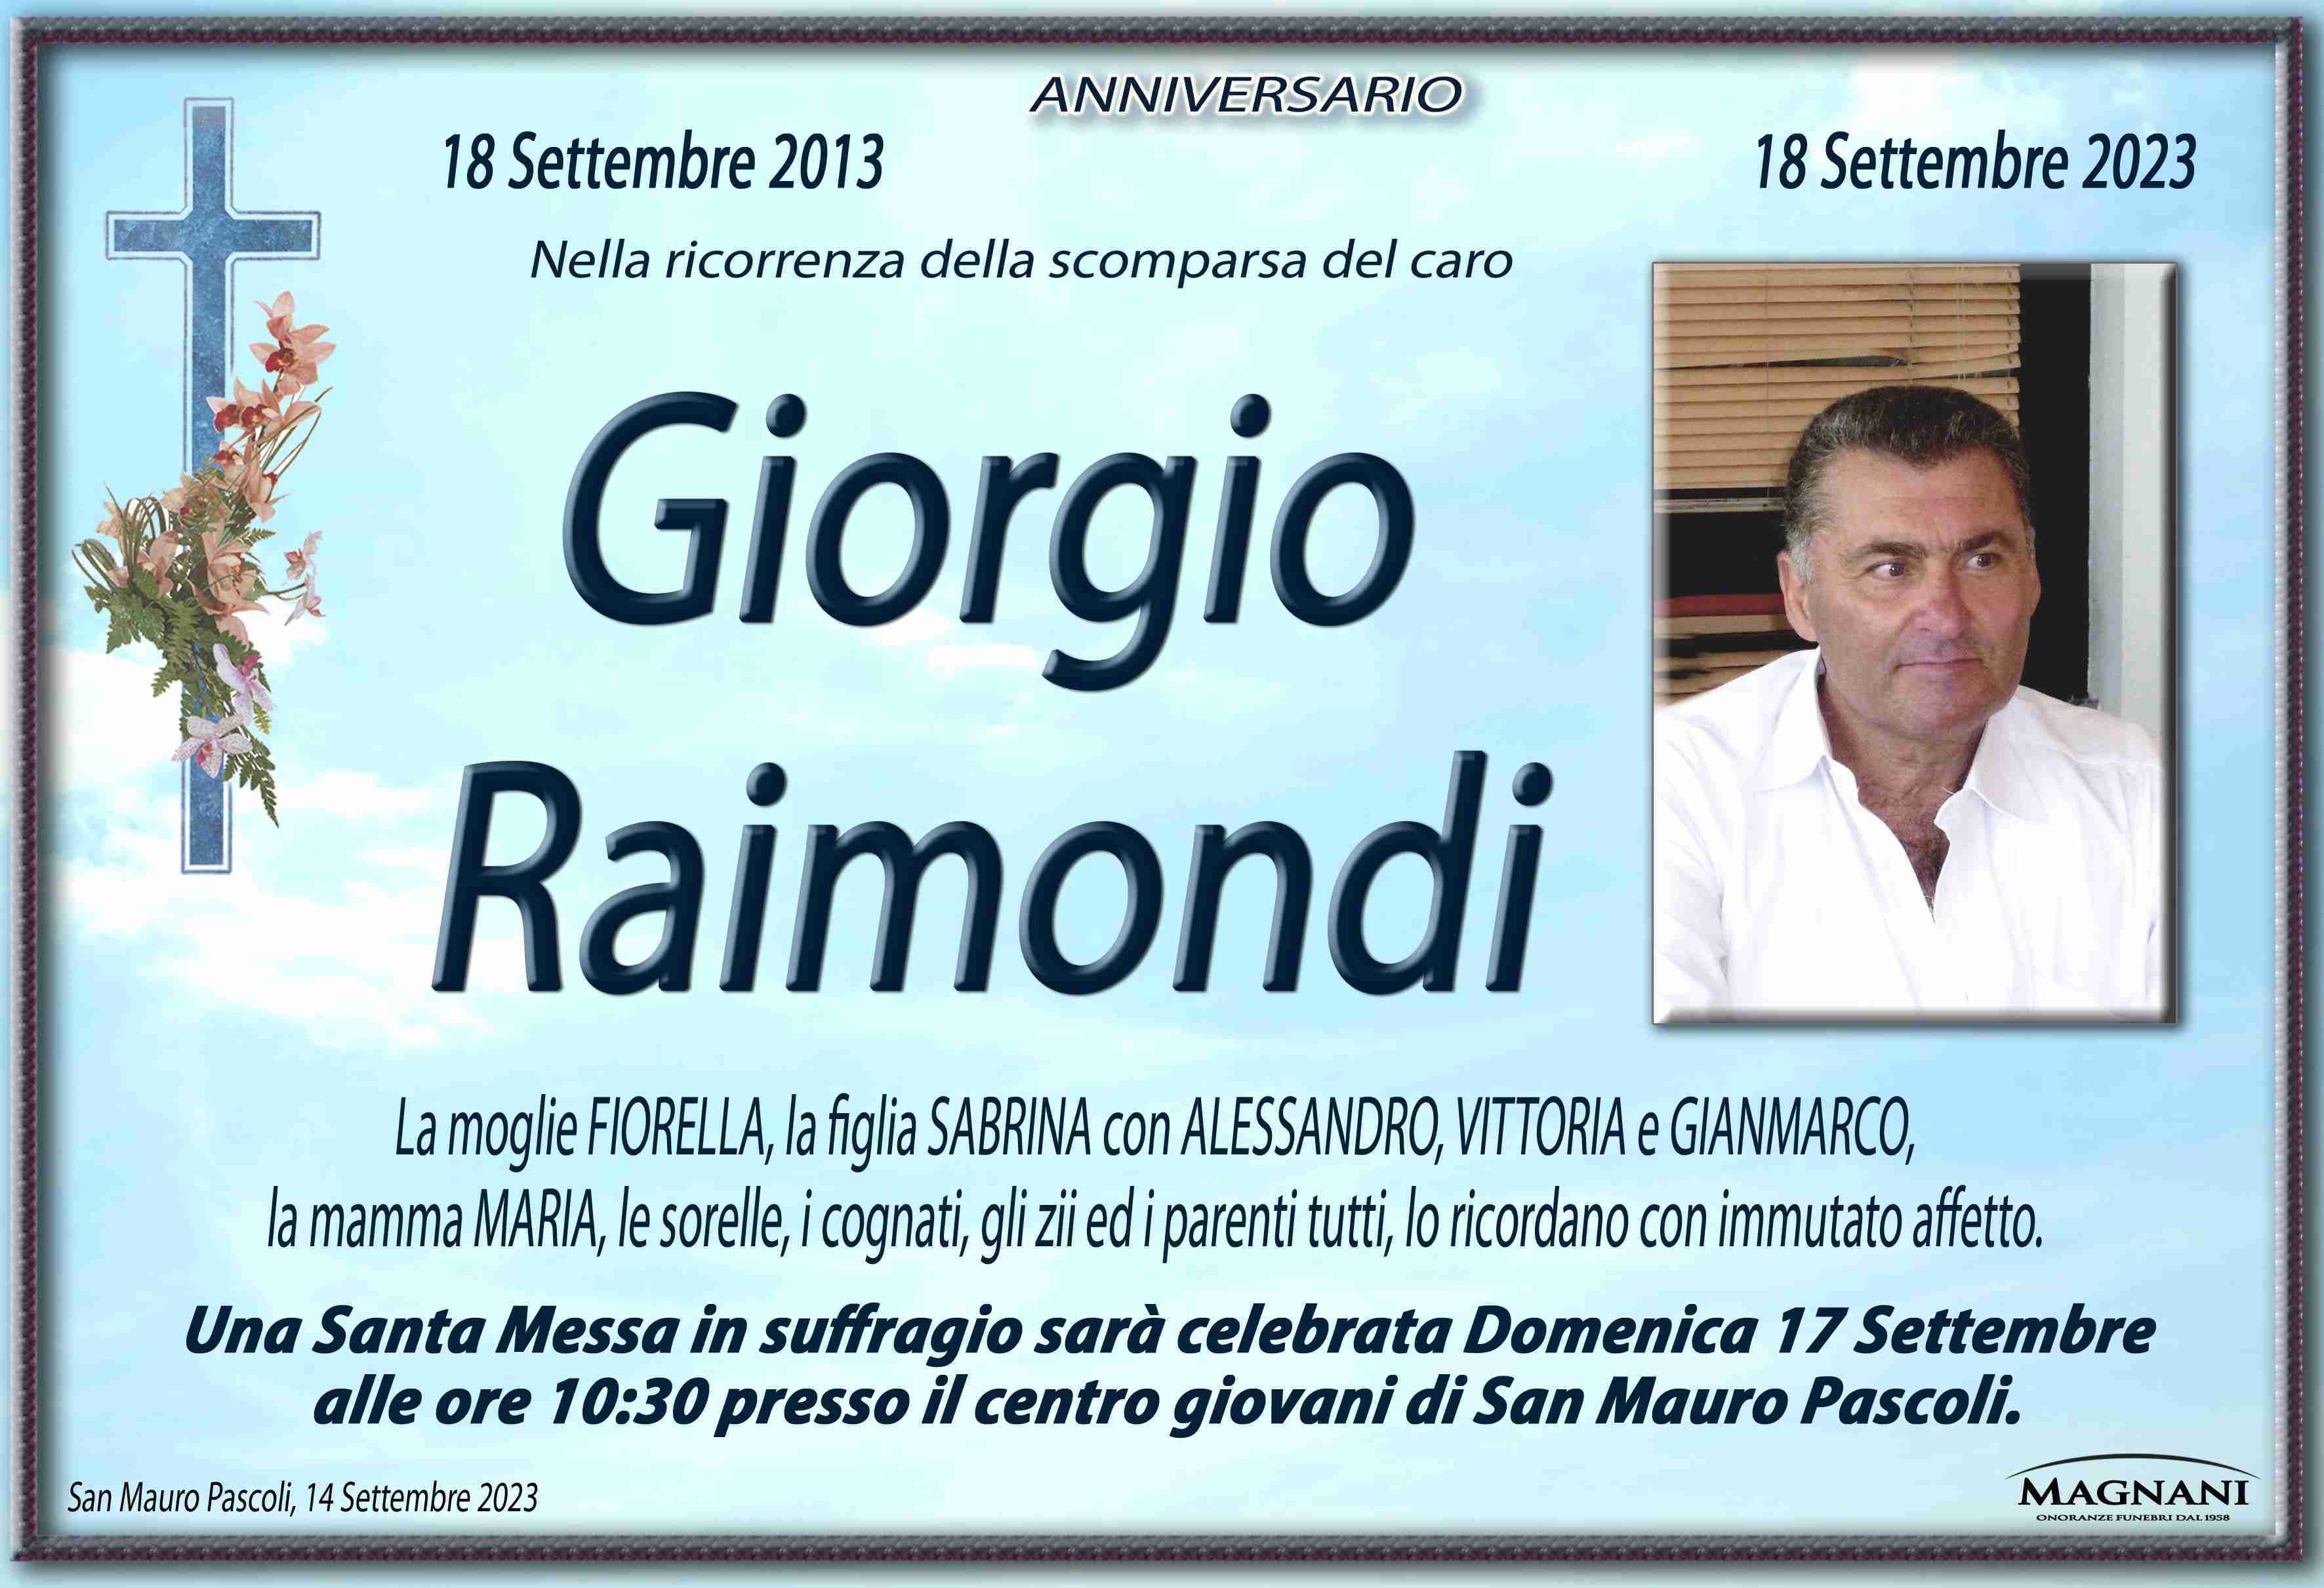 Giorgio Raimondi